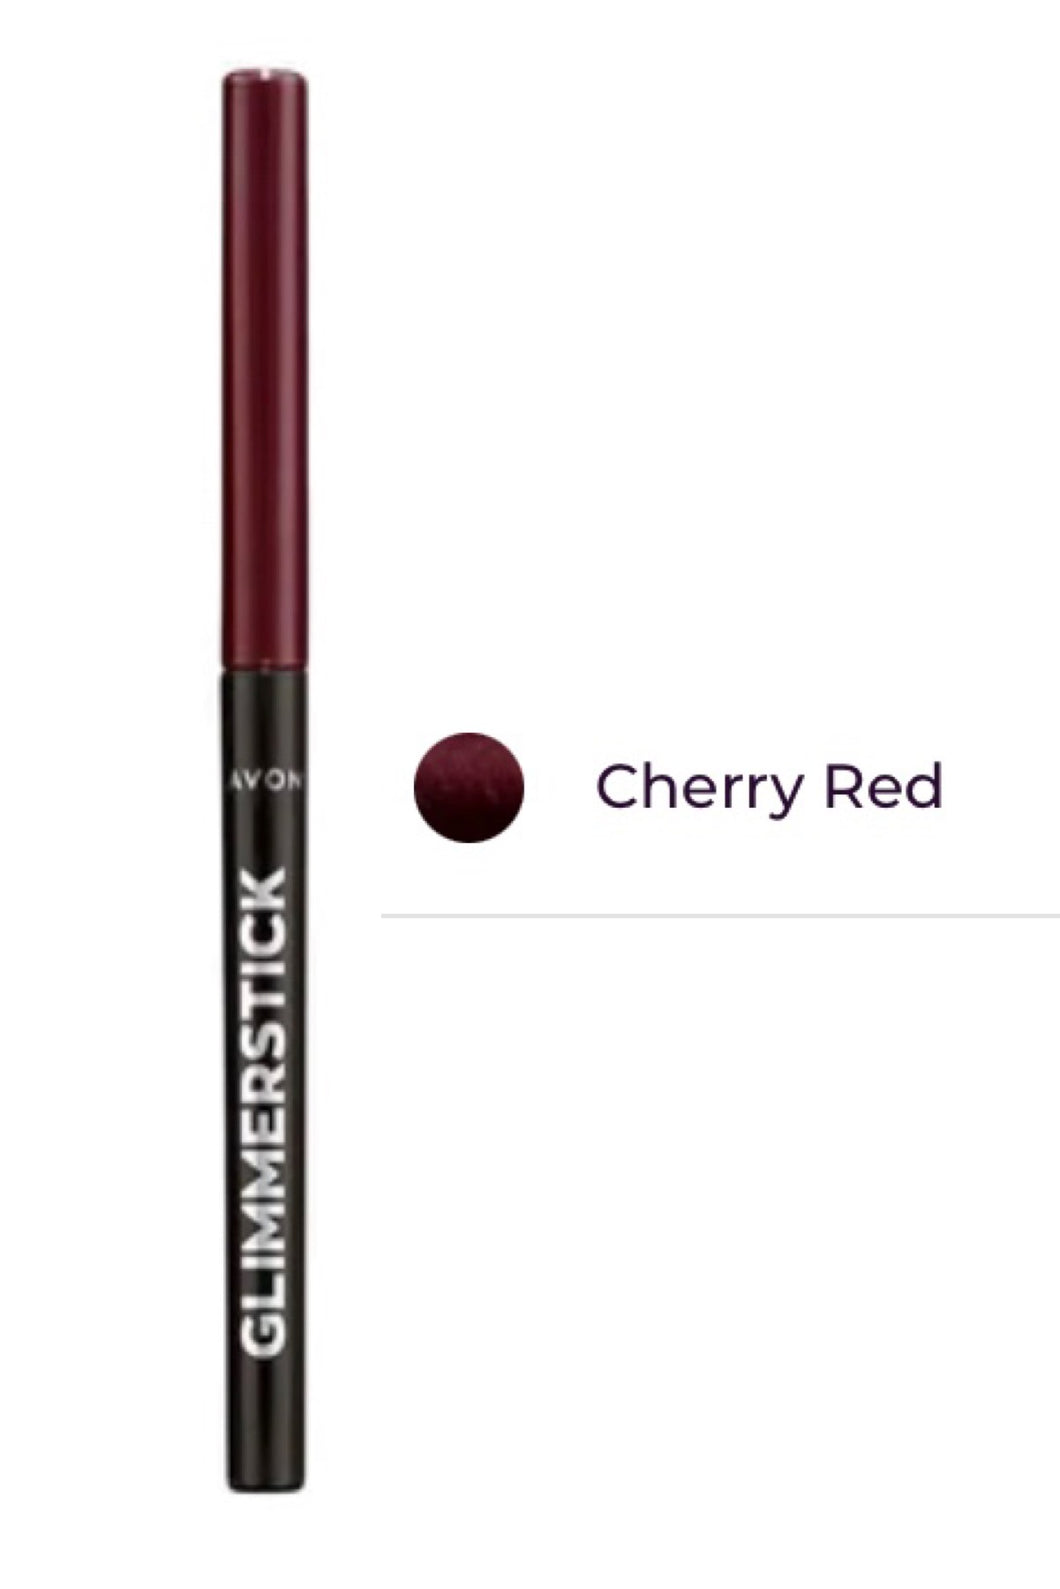 Cherry Red Retractable Glimmerstick Eyeliner UK